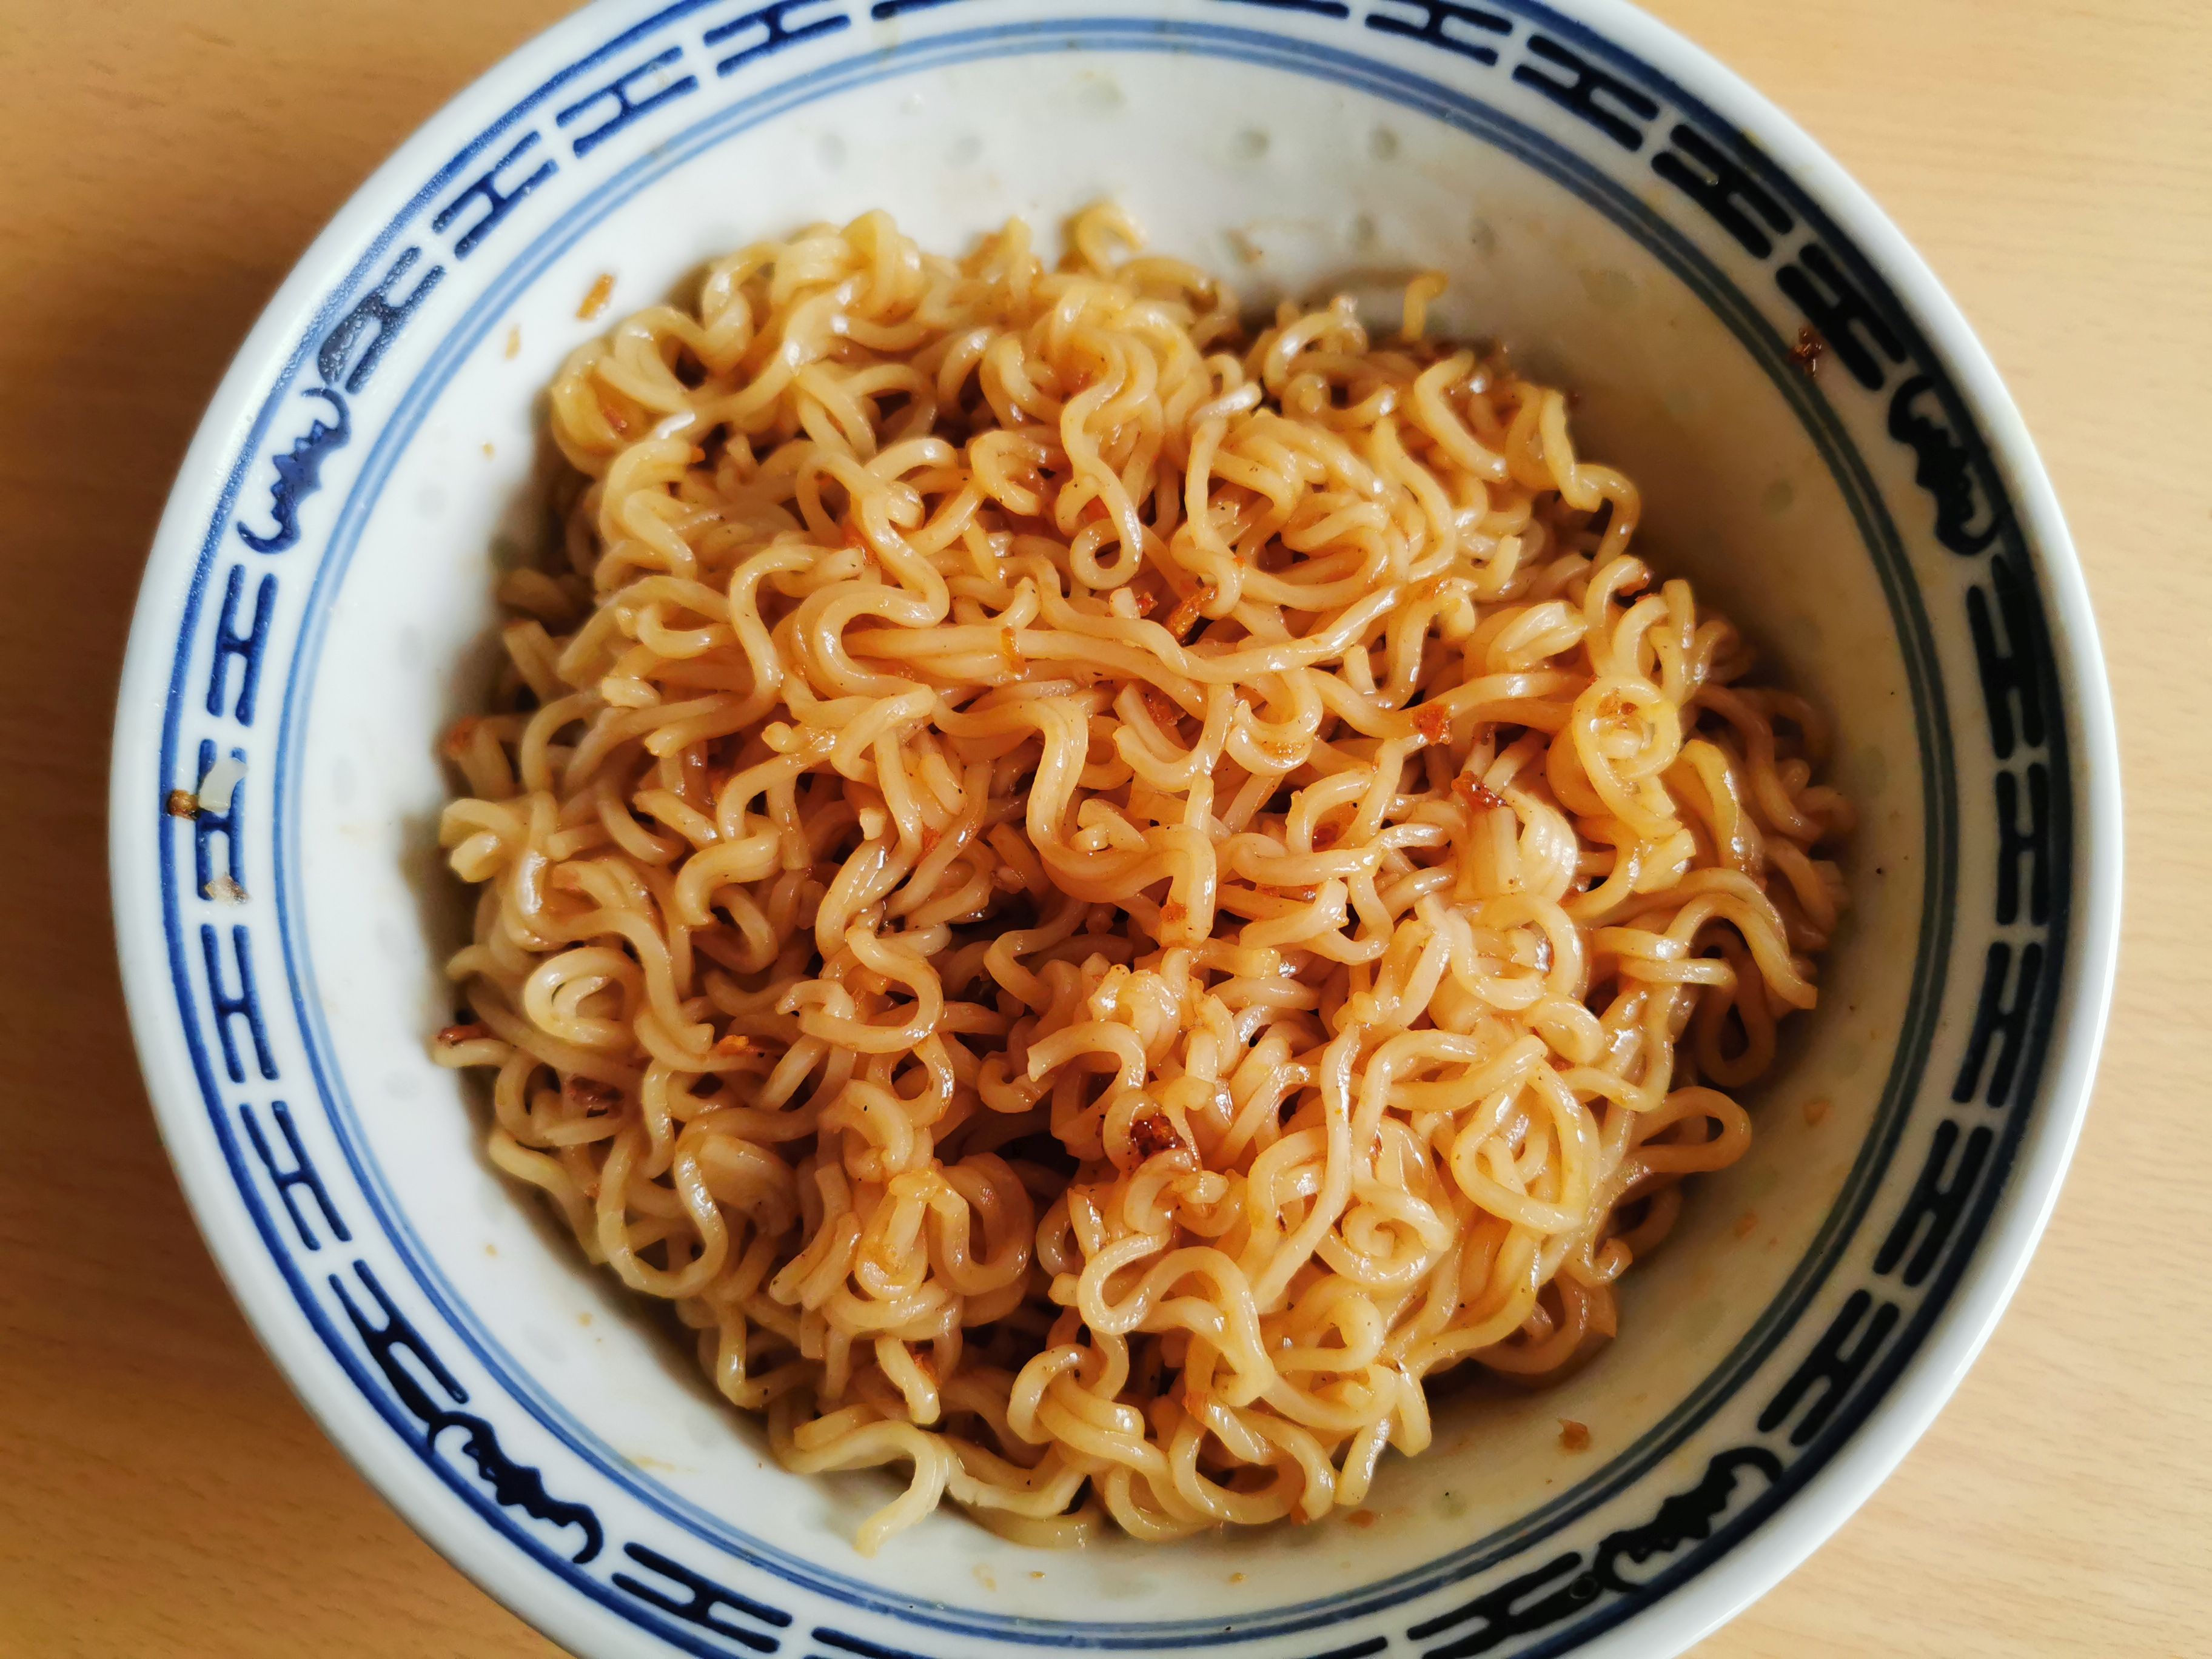 #2144: Koka Oriental Instant Noodles "The Original Mi Goreng" (Fried Noodles)